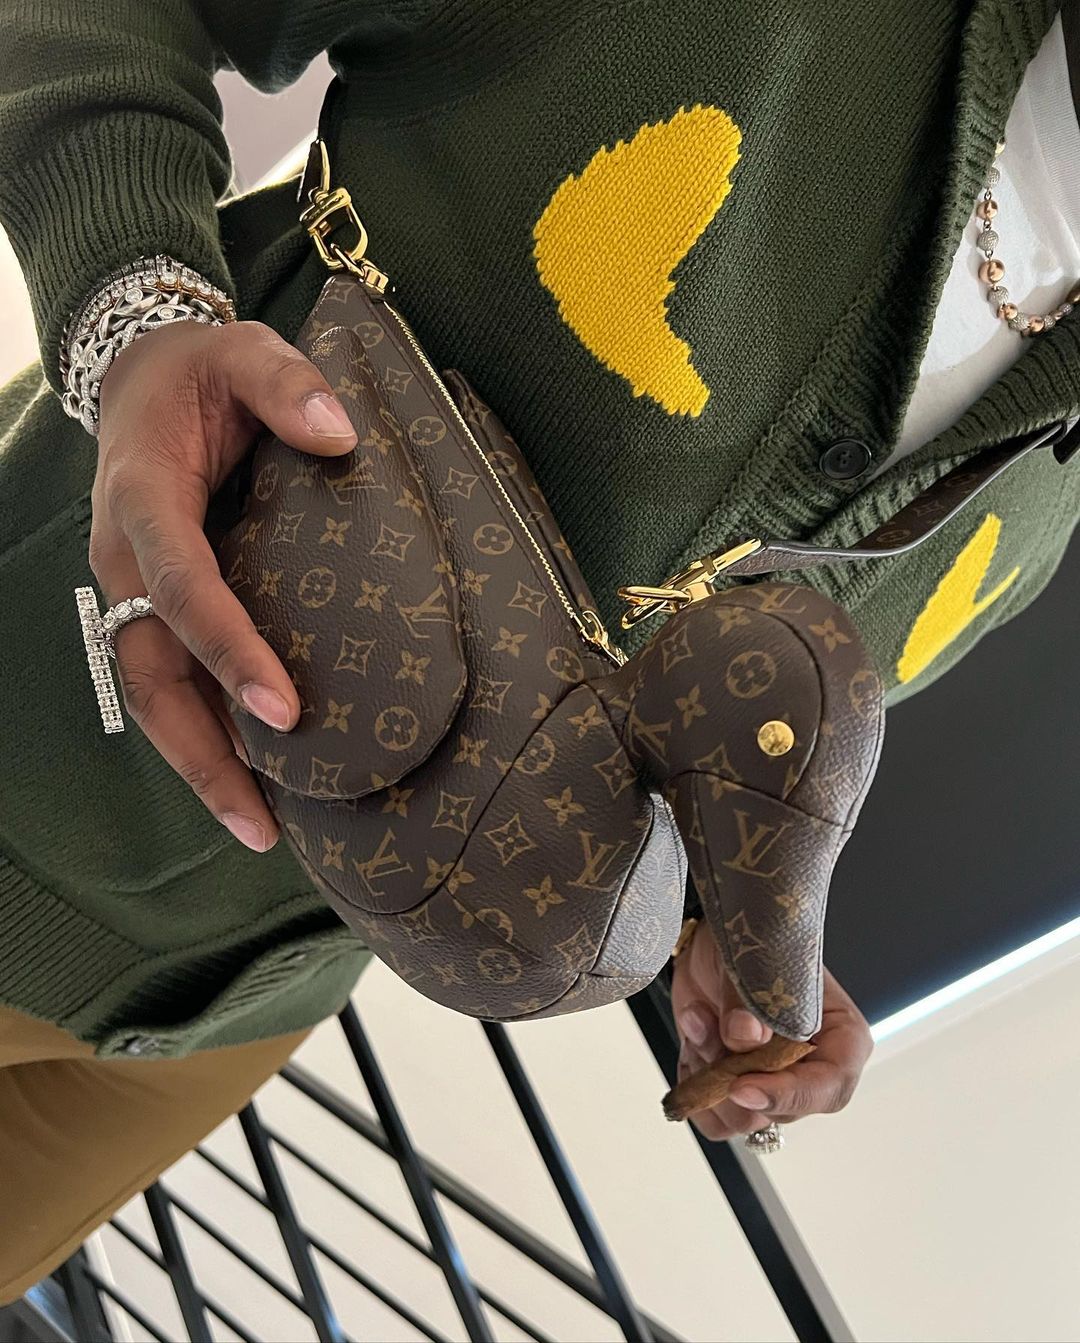 Louis Vuitton x NIGO (2) Duck Bag official images. Release November 2021,  retail $4,450 dollars 🦆 Photo: @dlouisv.co / @louisvuitton